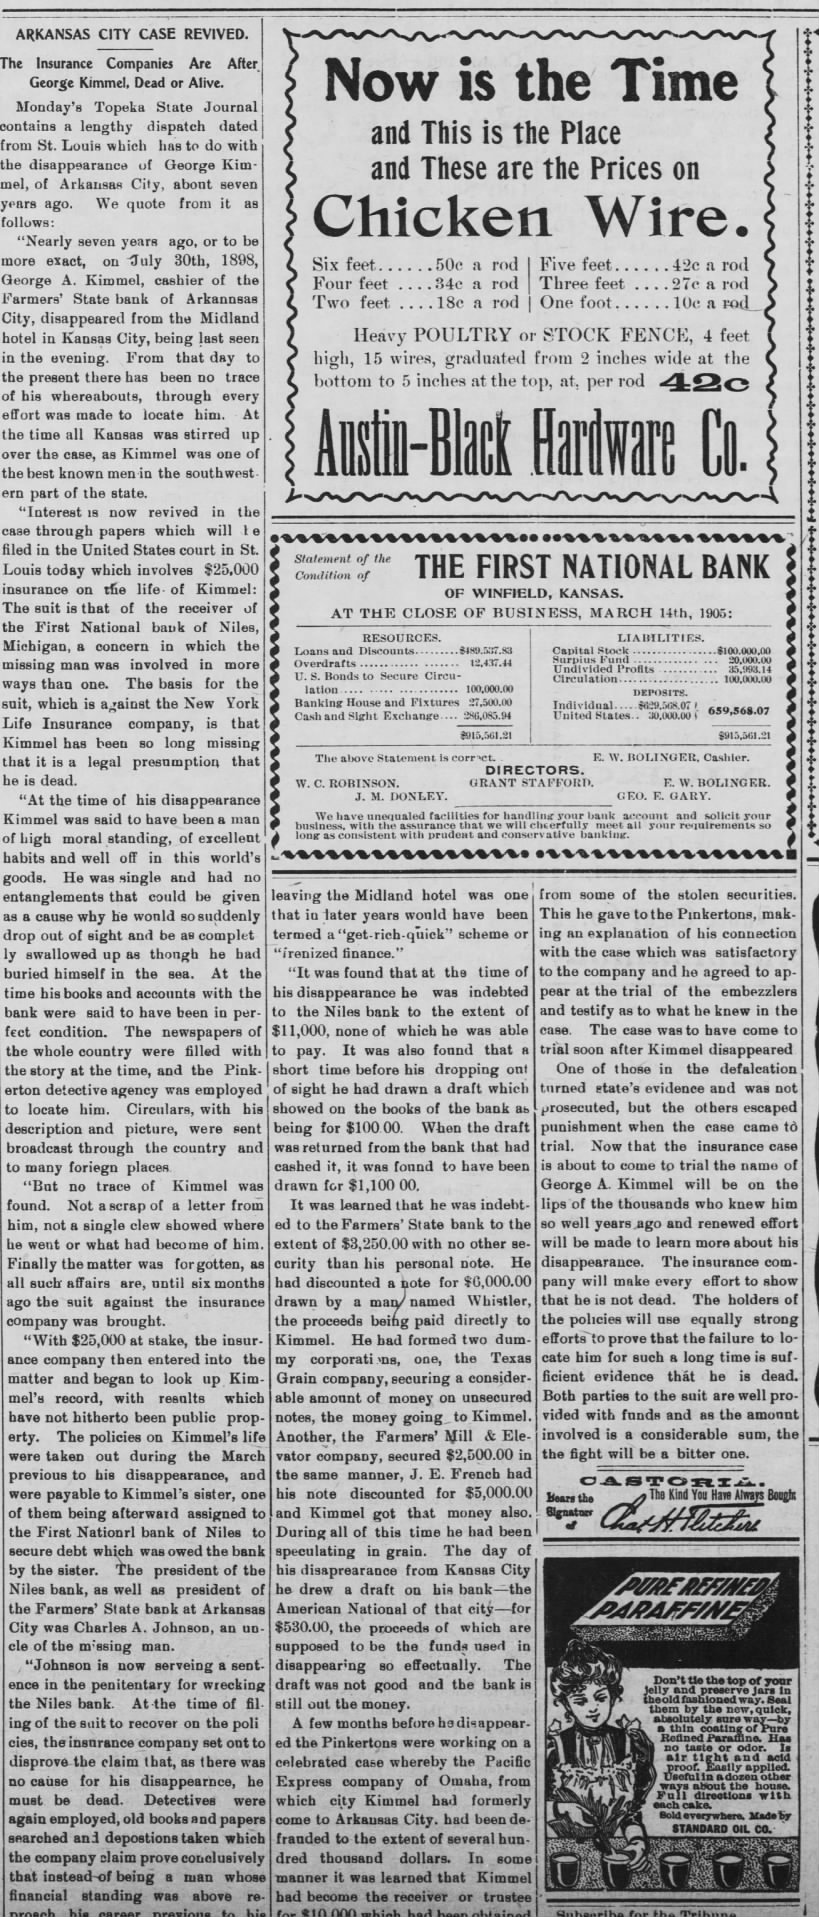 April 7, 1905  The Winfield Tribune, Winfield, Kansas